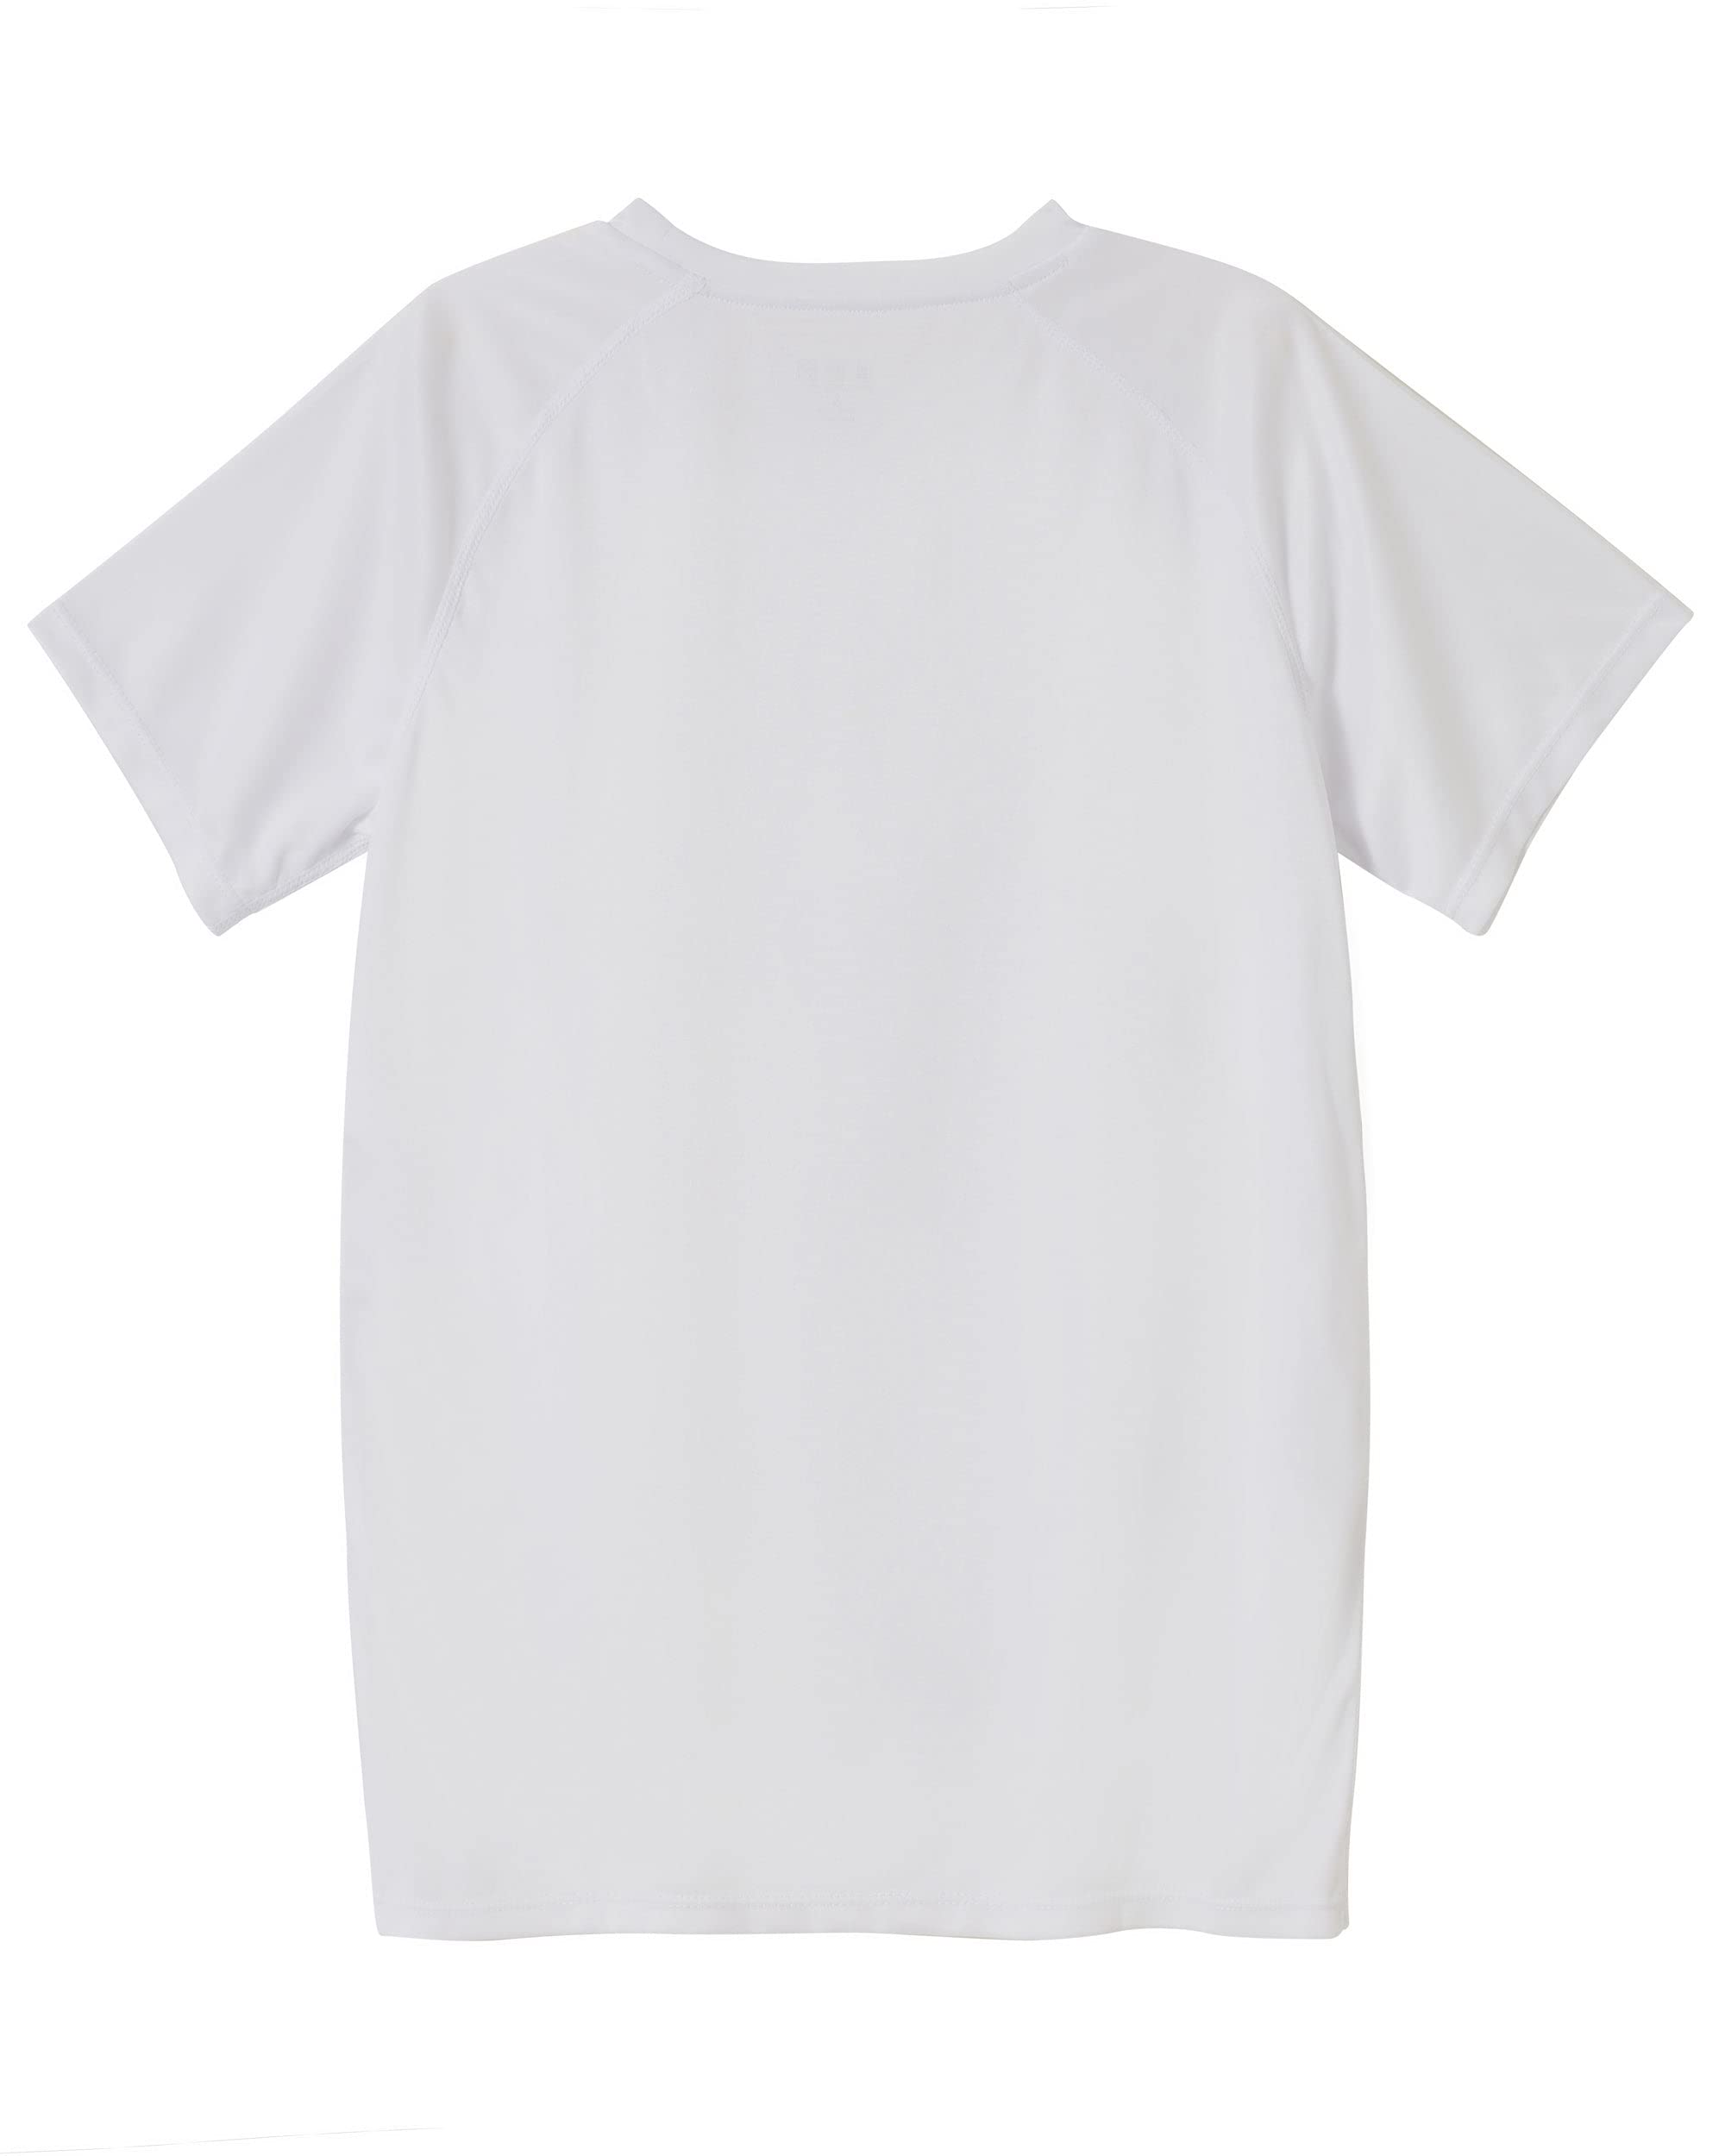 Willit Boy's Rash Guard Swim Shirts Short Sleeve UPF 50+ Sun Protection Shirt Youth SPF Fishing Quick Dry Shirt